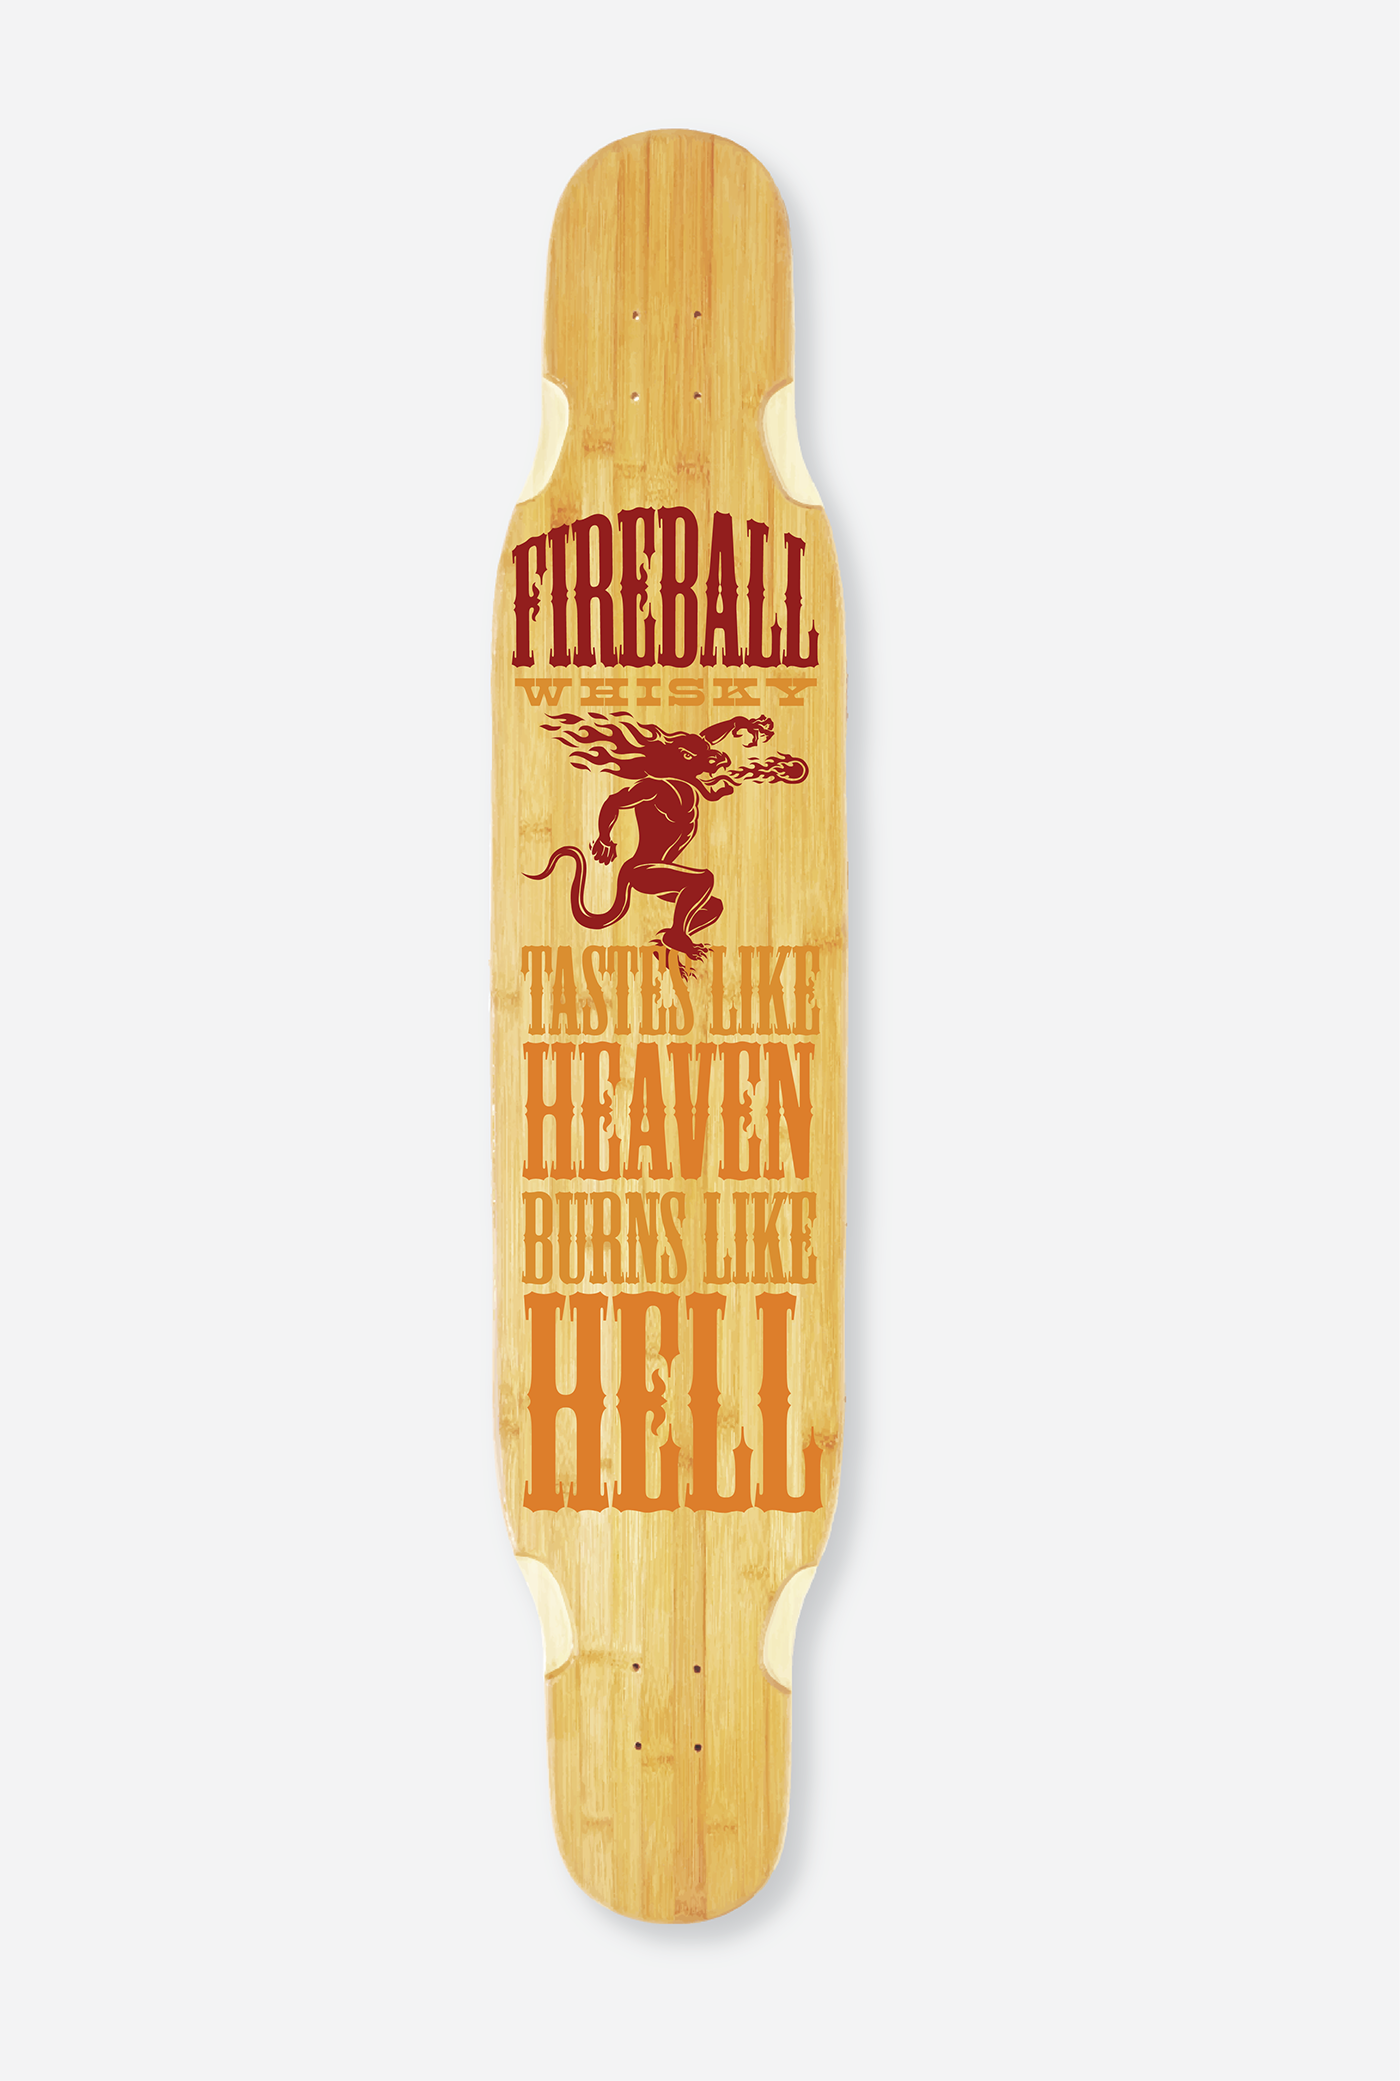 LONGBOARD fireball Whisky screenprint Handpaint Illustrator skateboard custom longboard giveaway fireball whisky